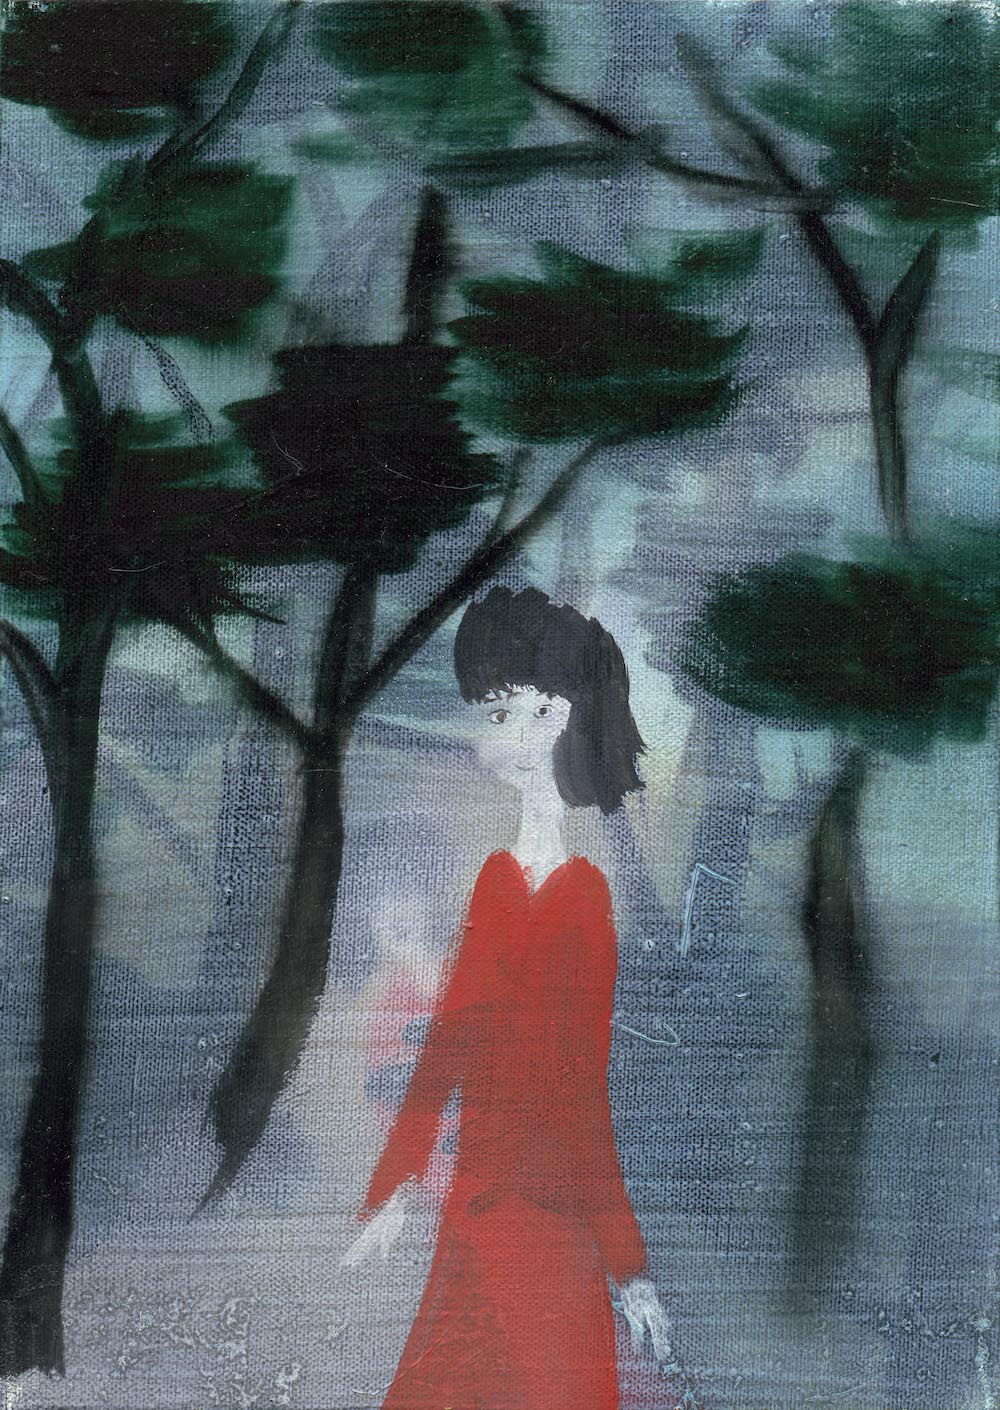 Condo Shanghai, Gallery Vacancy, Yu Nishimura, A Girl in the Pinery, 2018